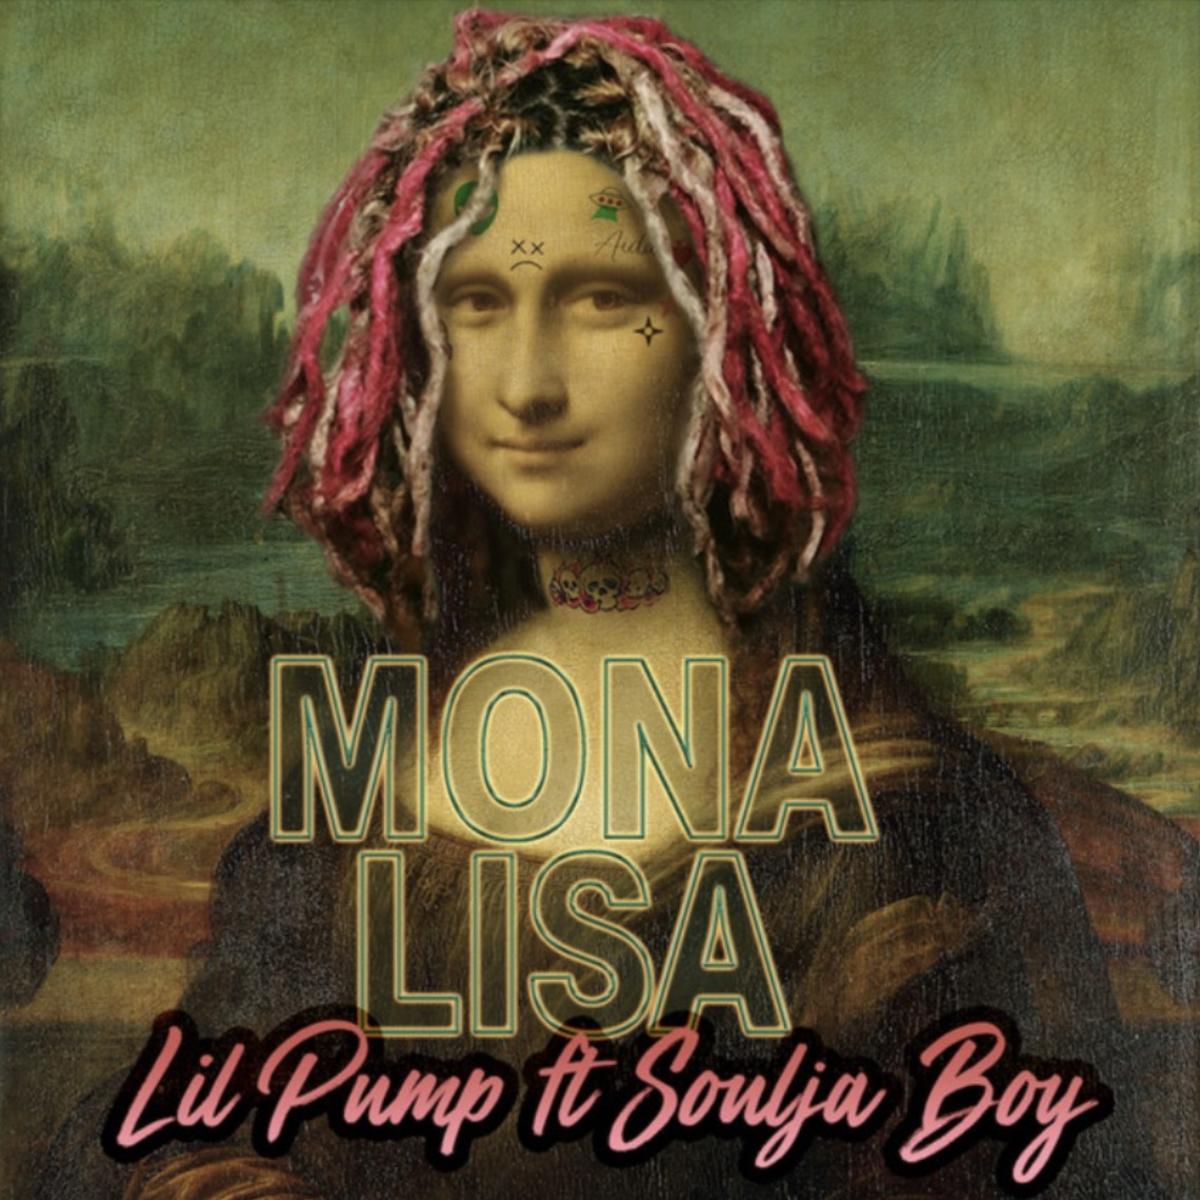 Lil Pump & Soulja Boy Join Forces For “Mona Lisa”